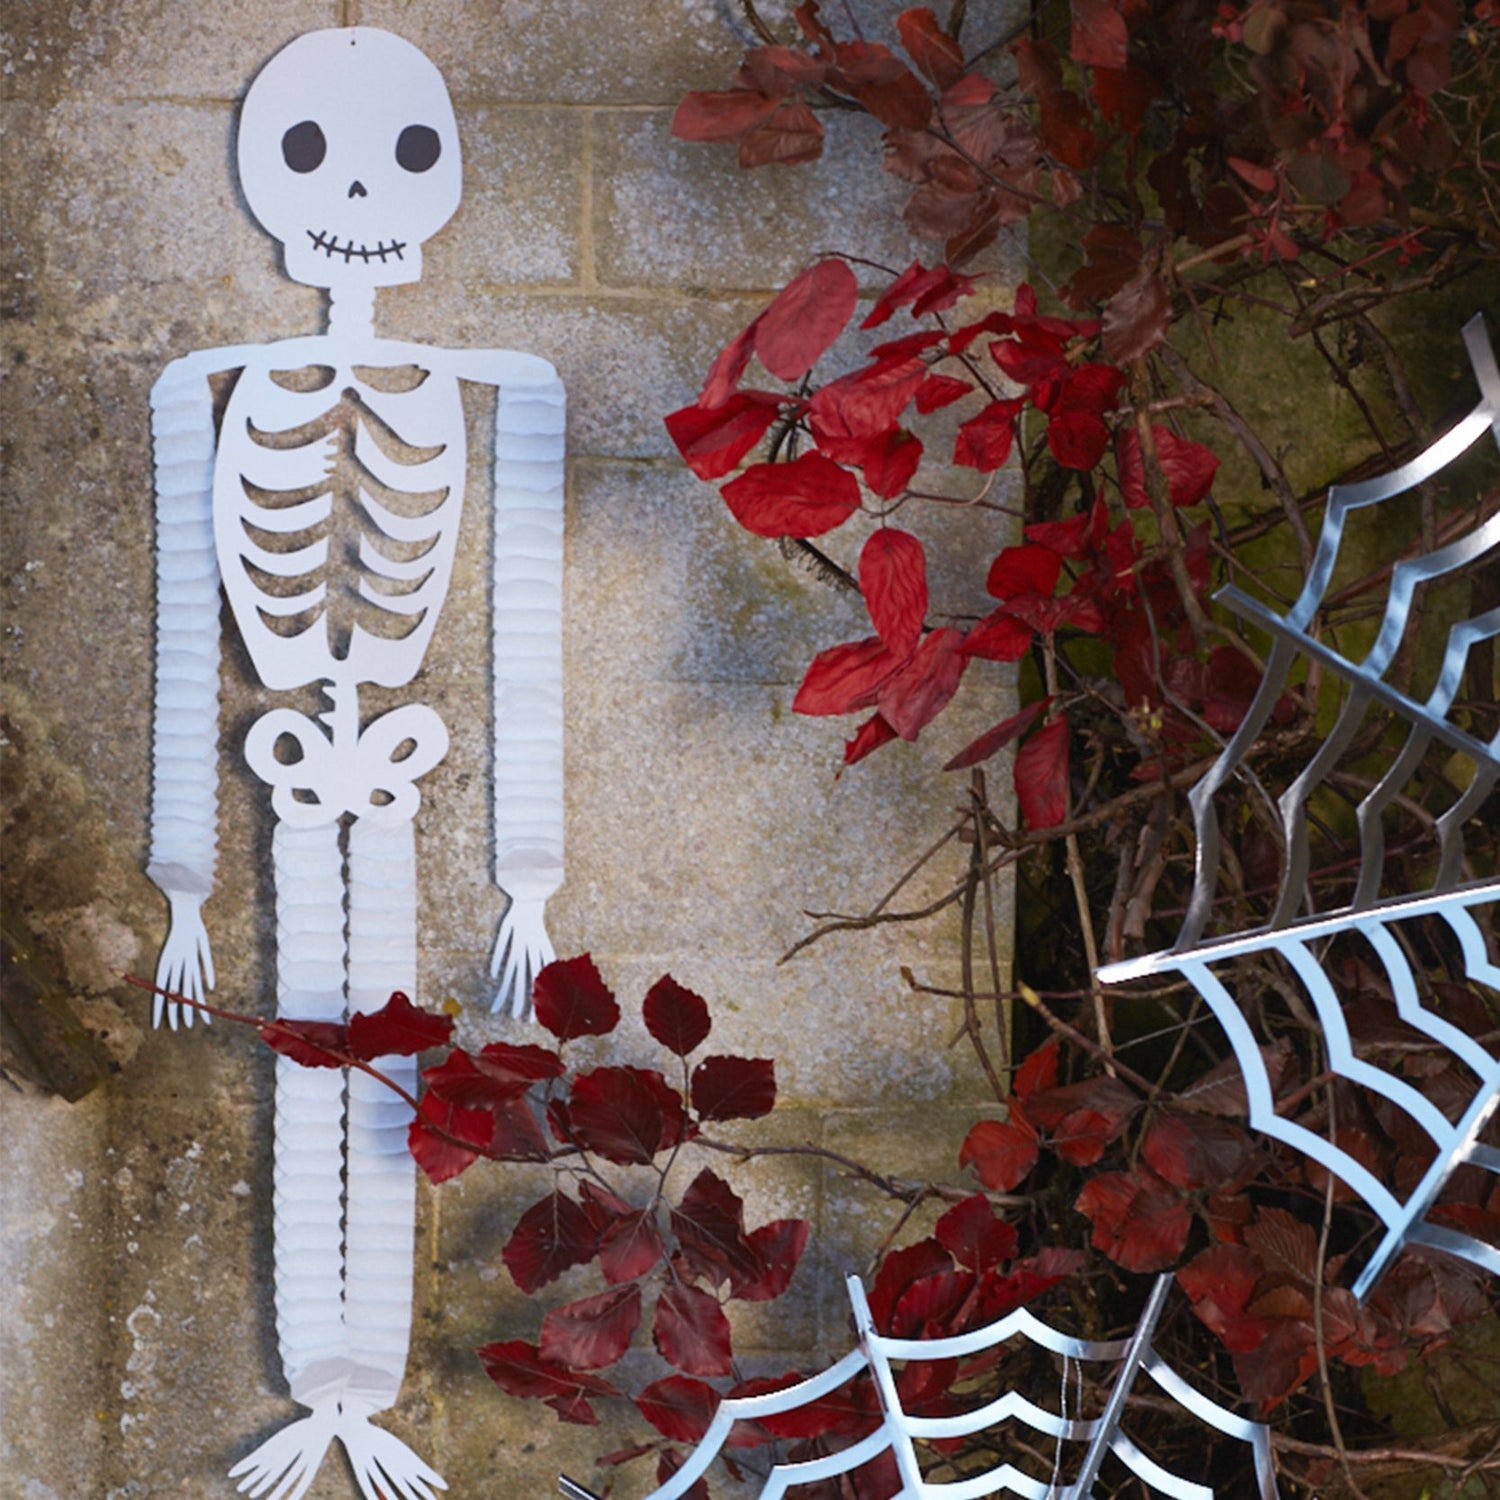 outside Halloween decor with skeleton honeycomb decoration